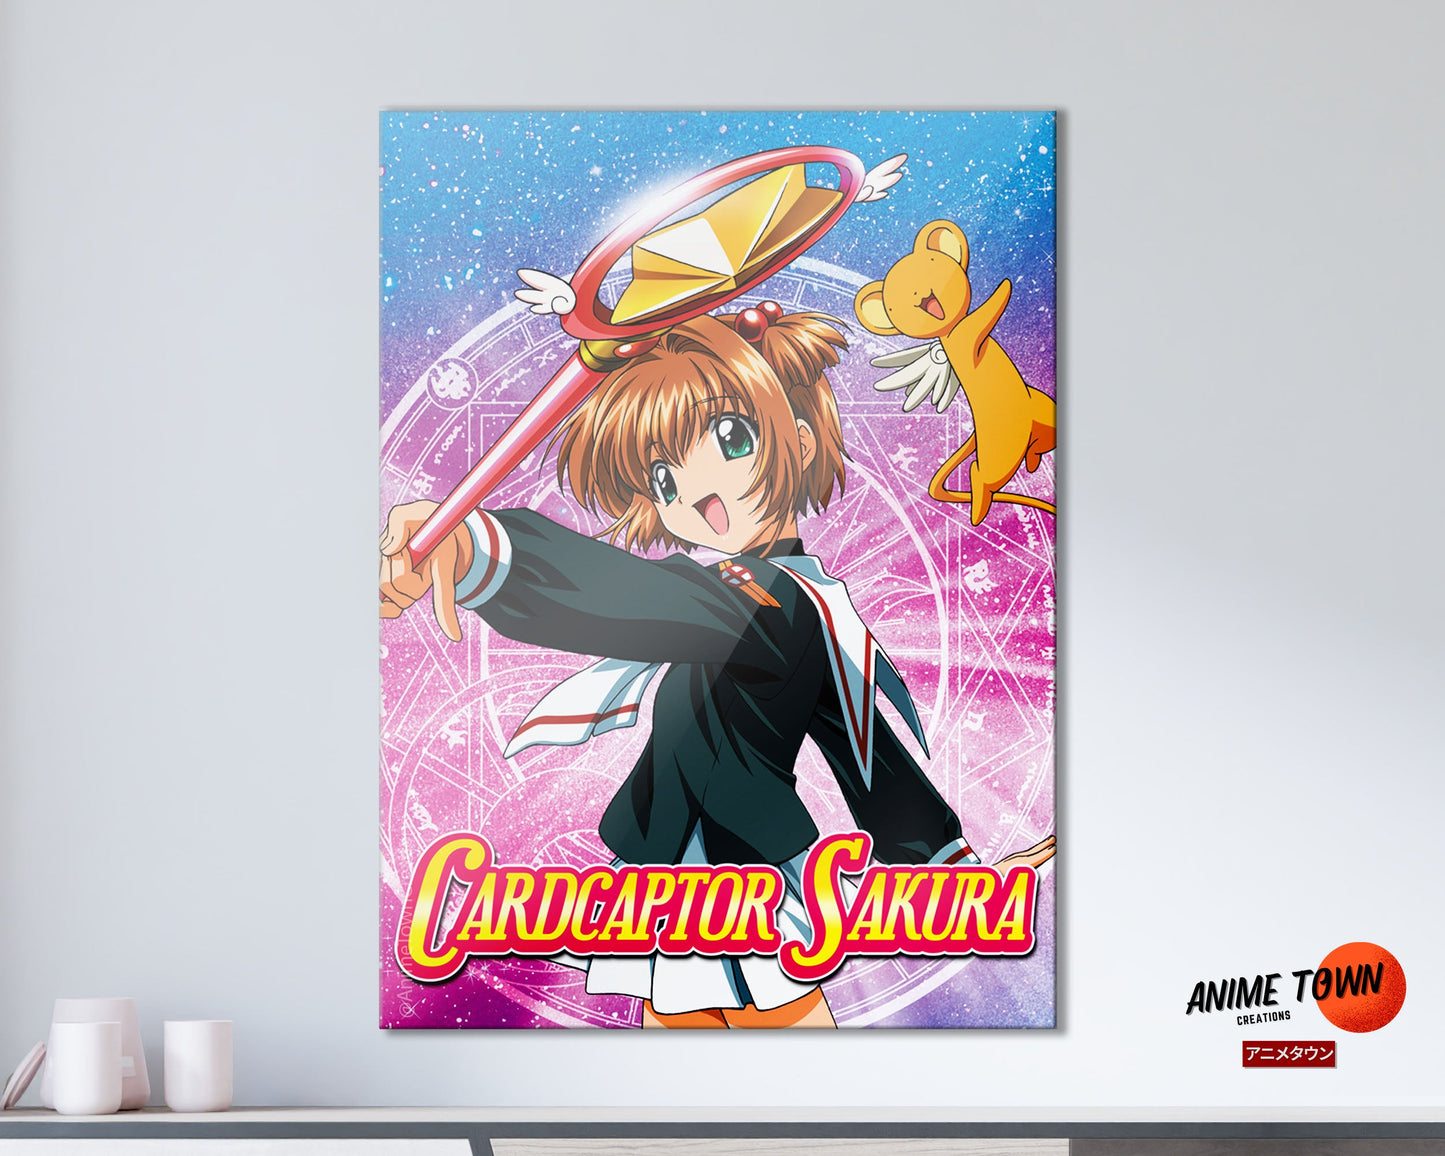 Anime Town Creations Metal Poster Cardcaptor Sakura 5" x 7" Home Goods - Anime Cardcaptor Sakura Metal Poster